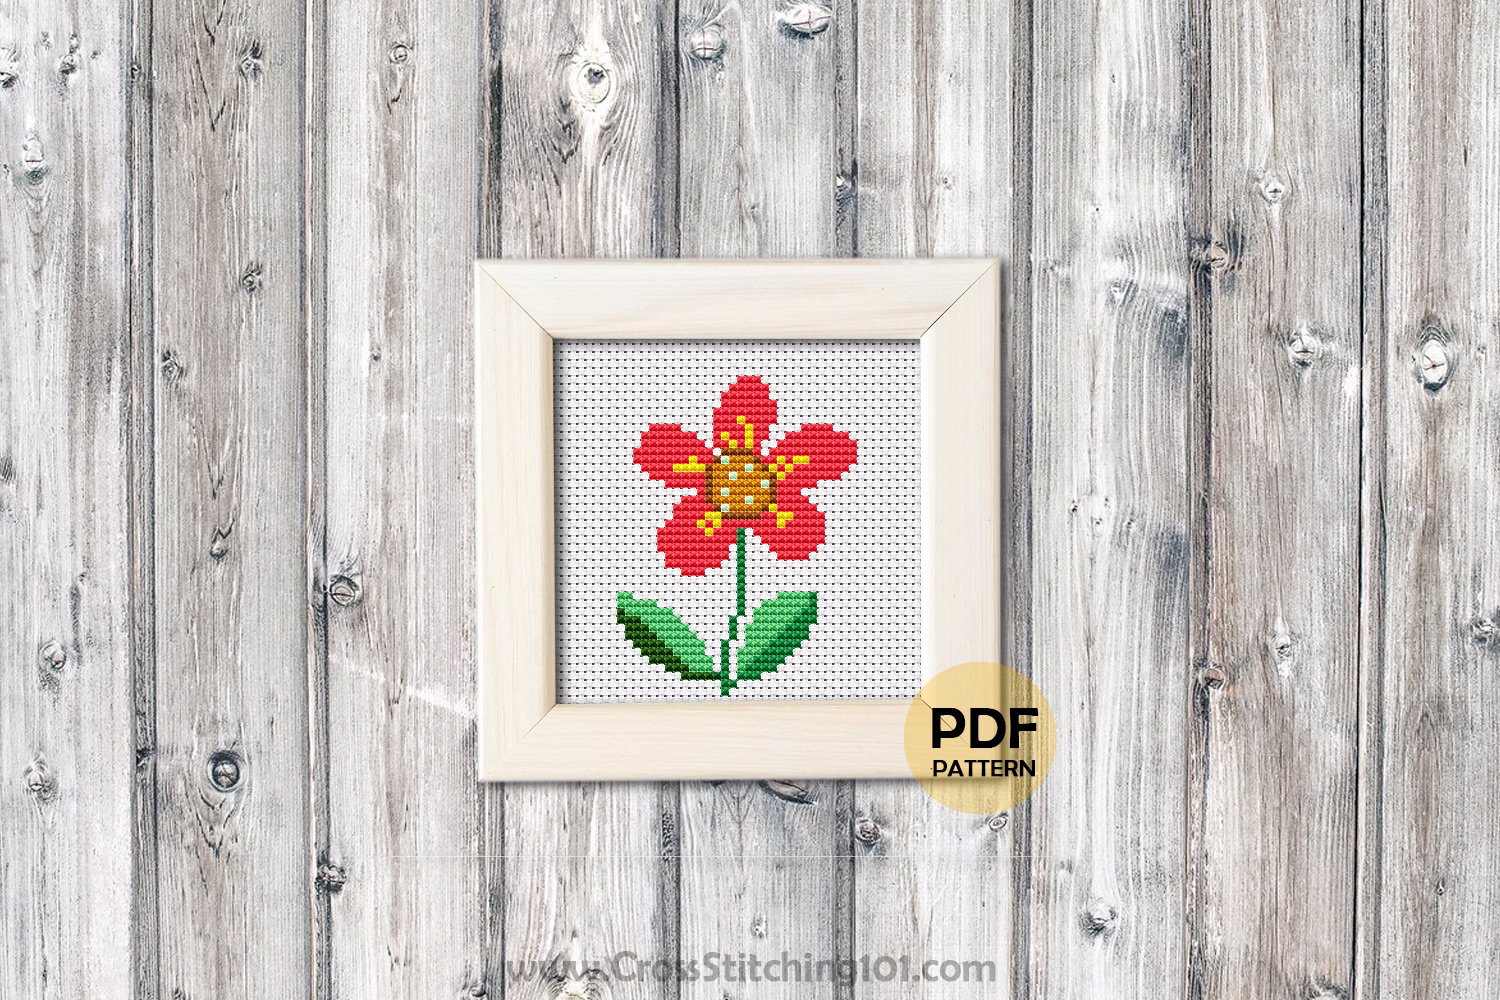 Red Flower Cross Stitch PDF